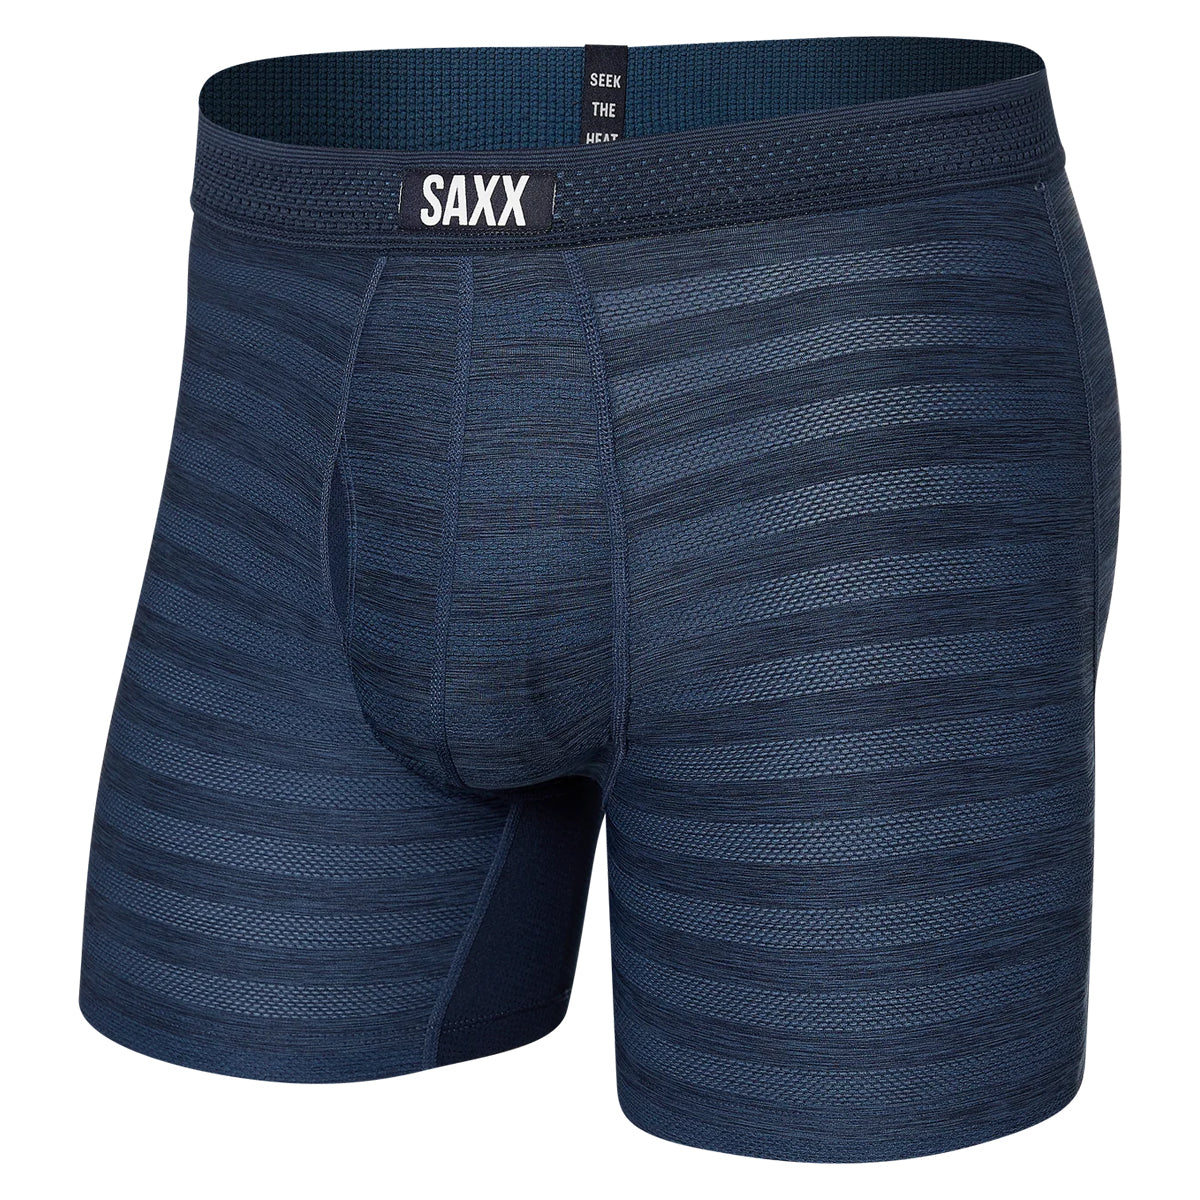 SAXX Hot Shot Boxer Brief in  by GOHUNT | SAXX - GOHUNT Shop